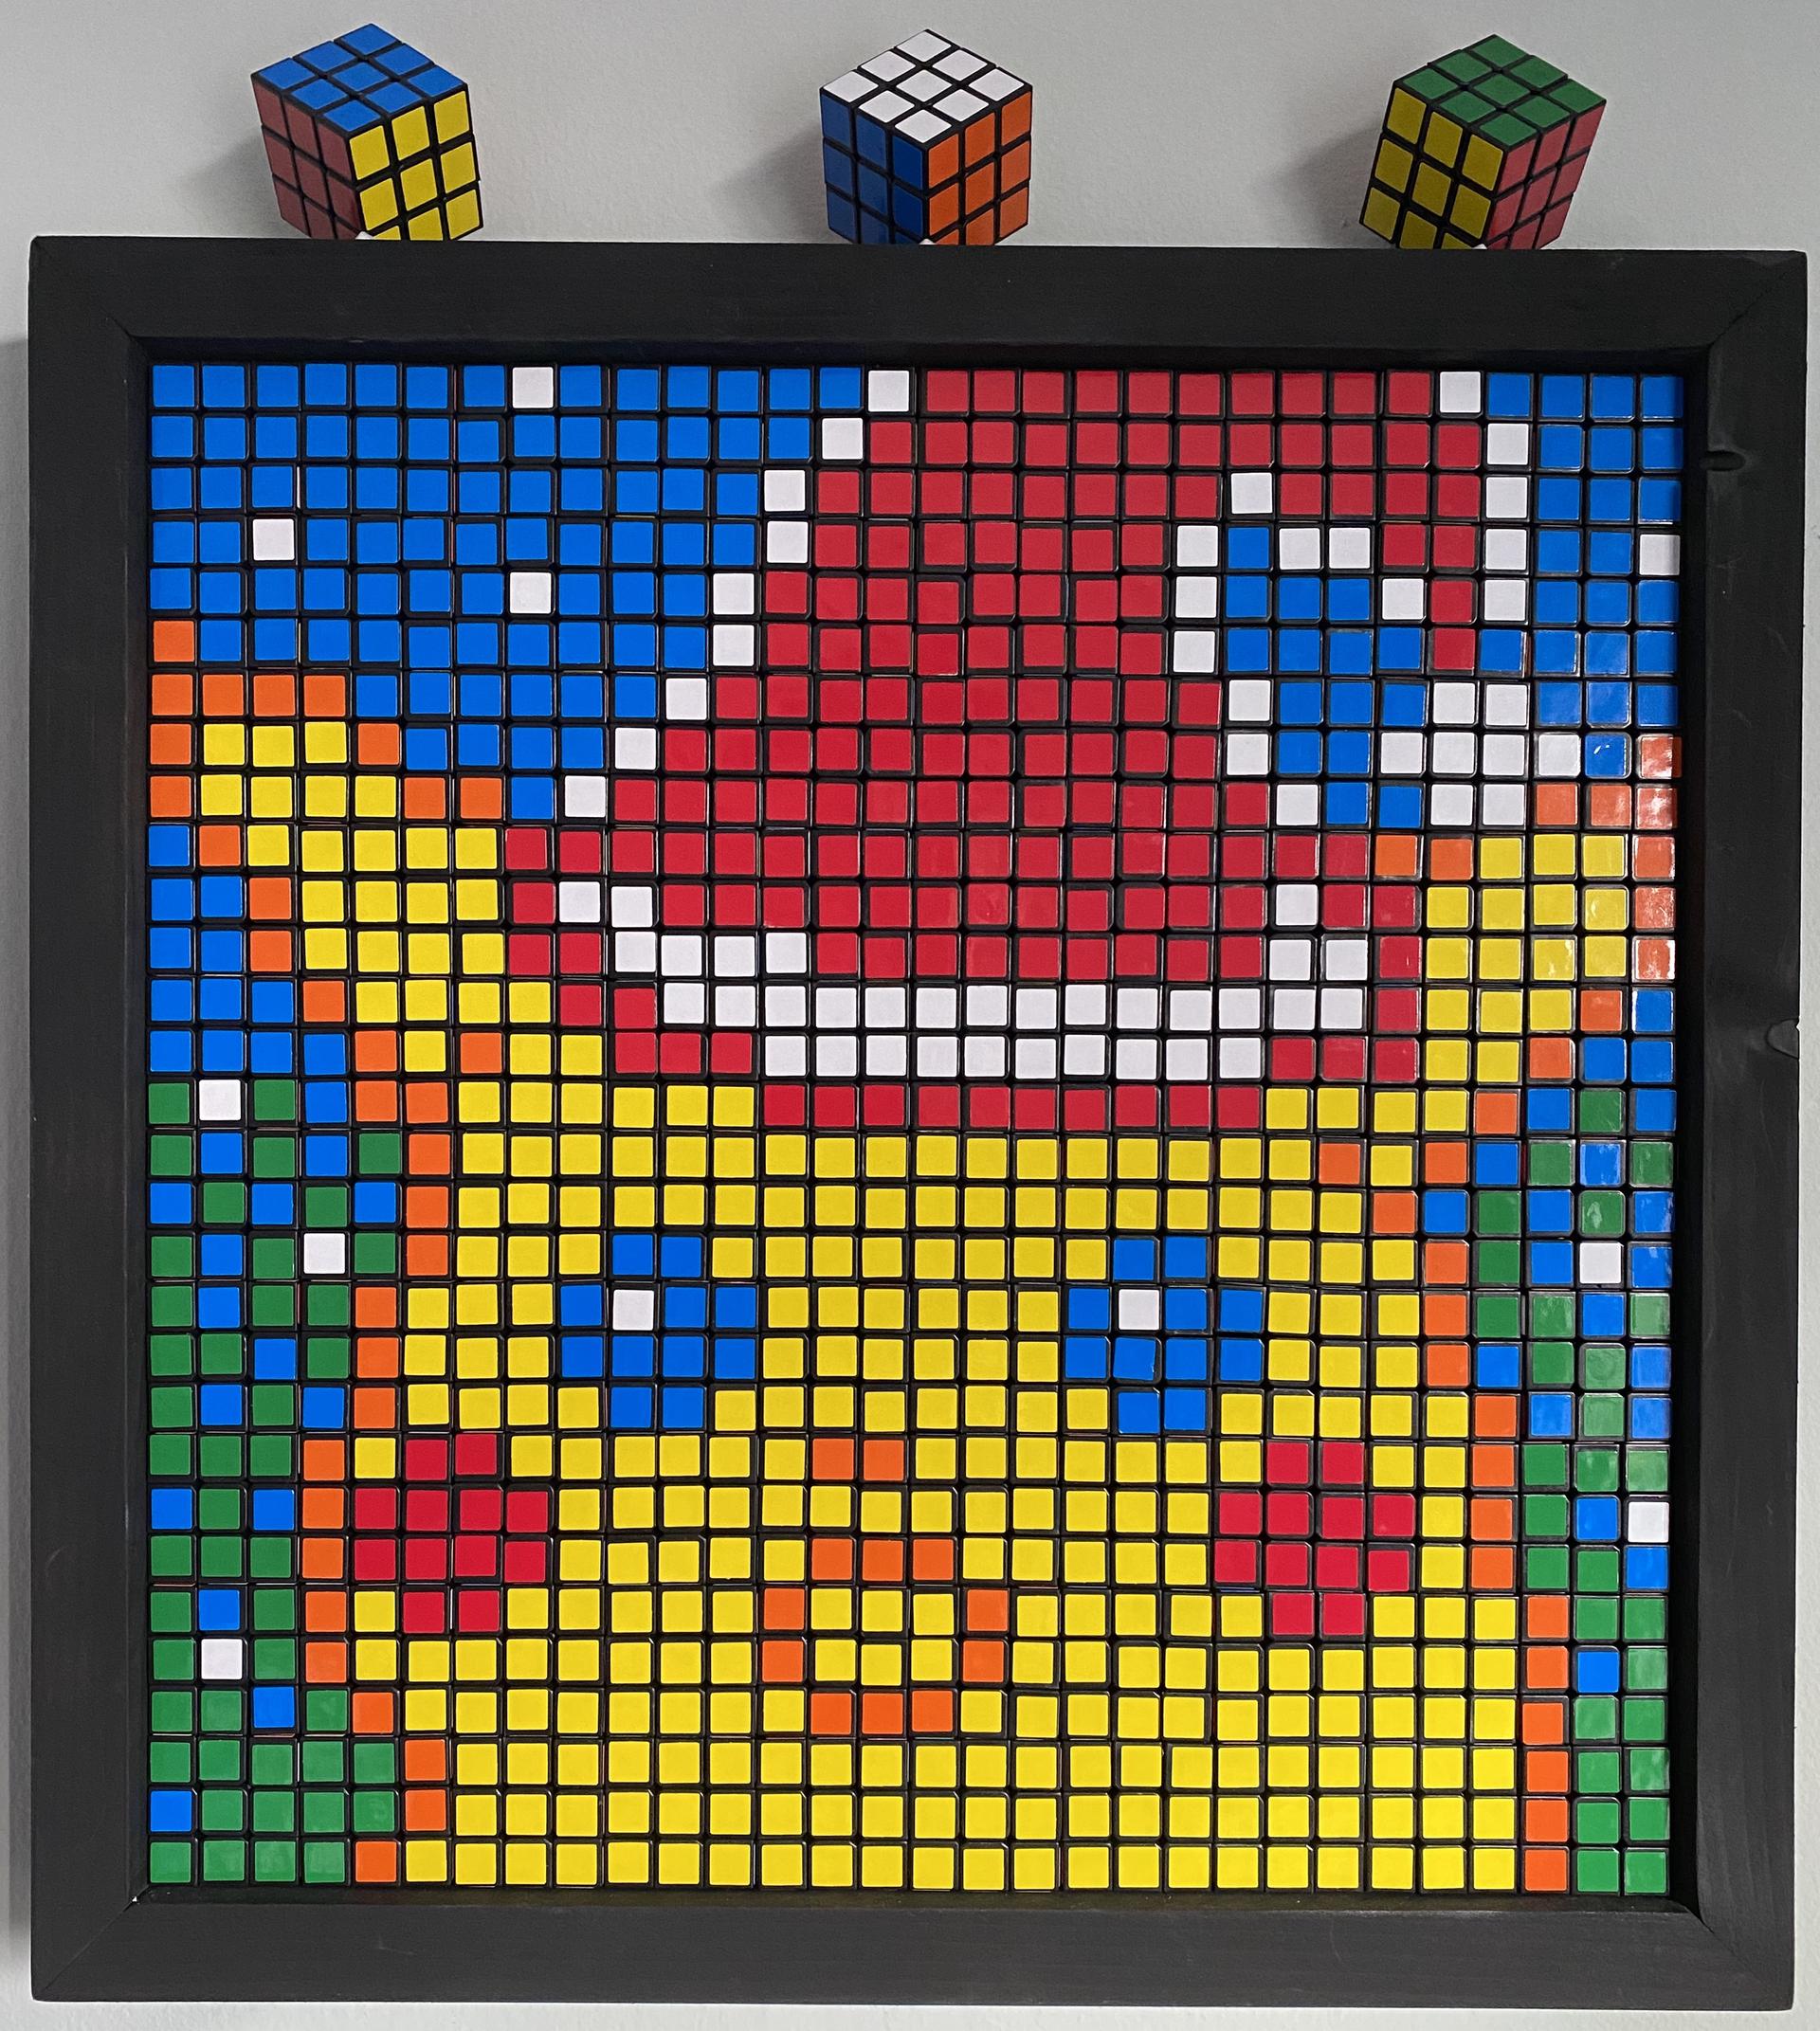 Rubik's cubes as pixel art of Wow Pikachu wearing a Santa hat